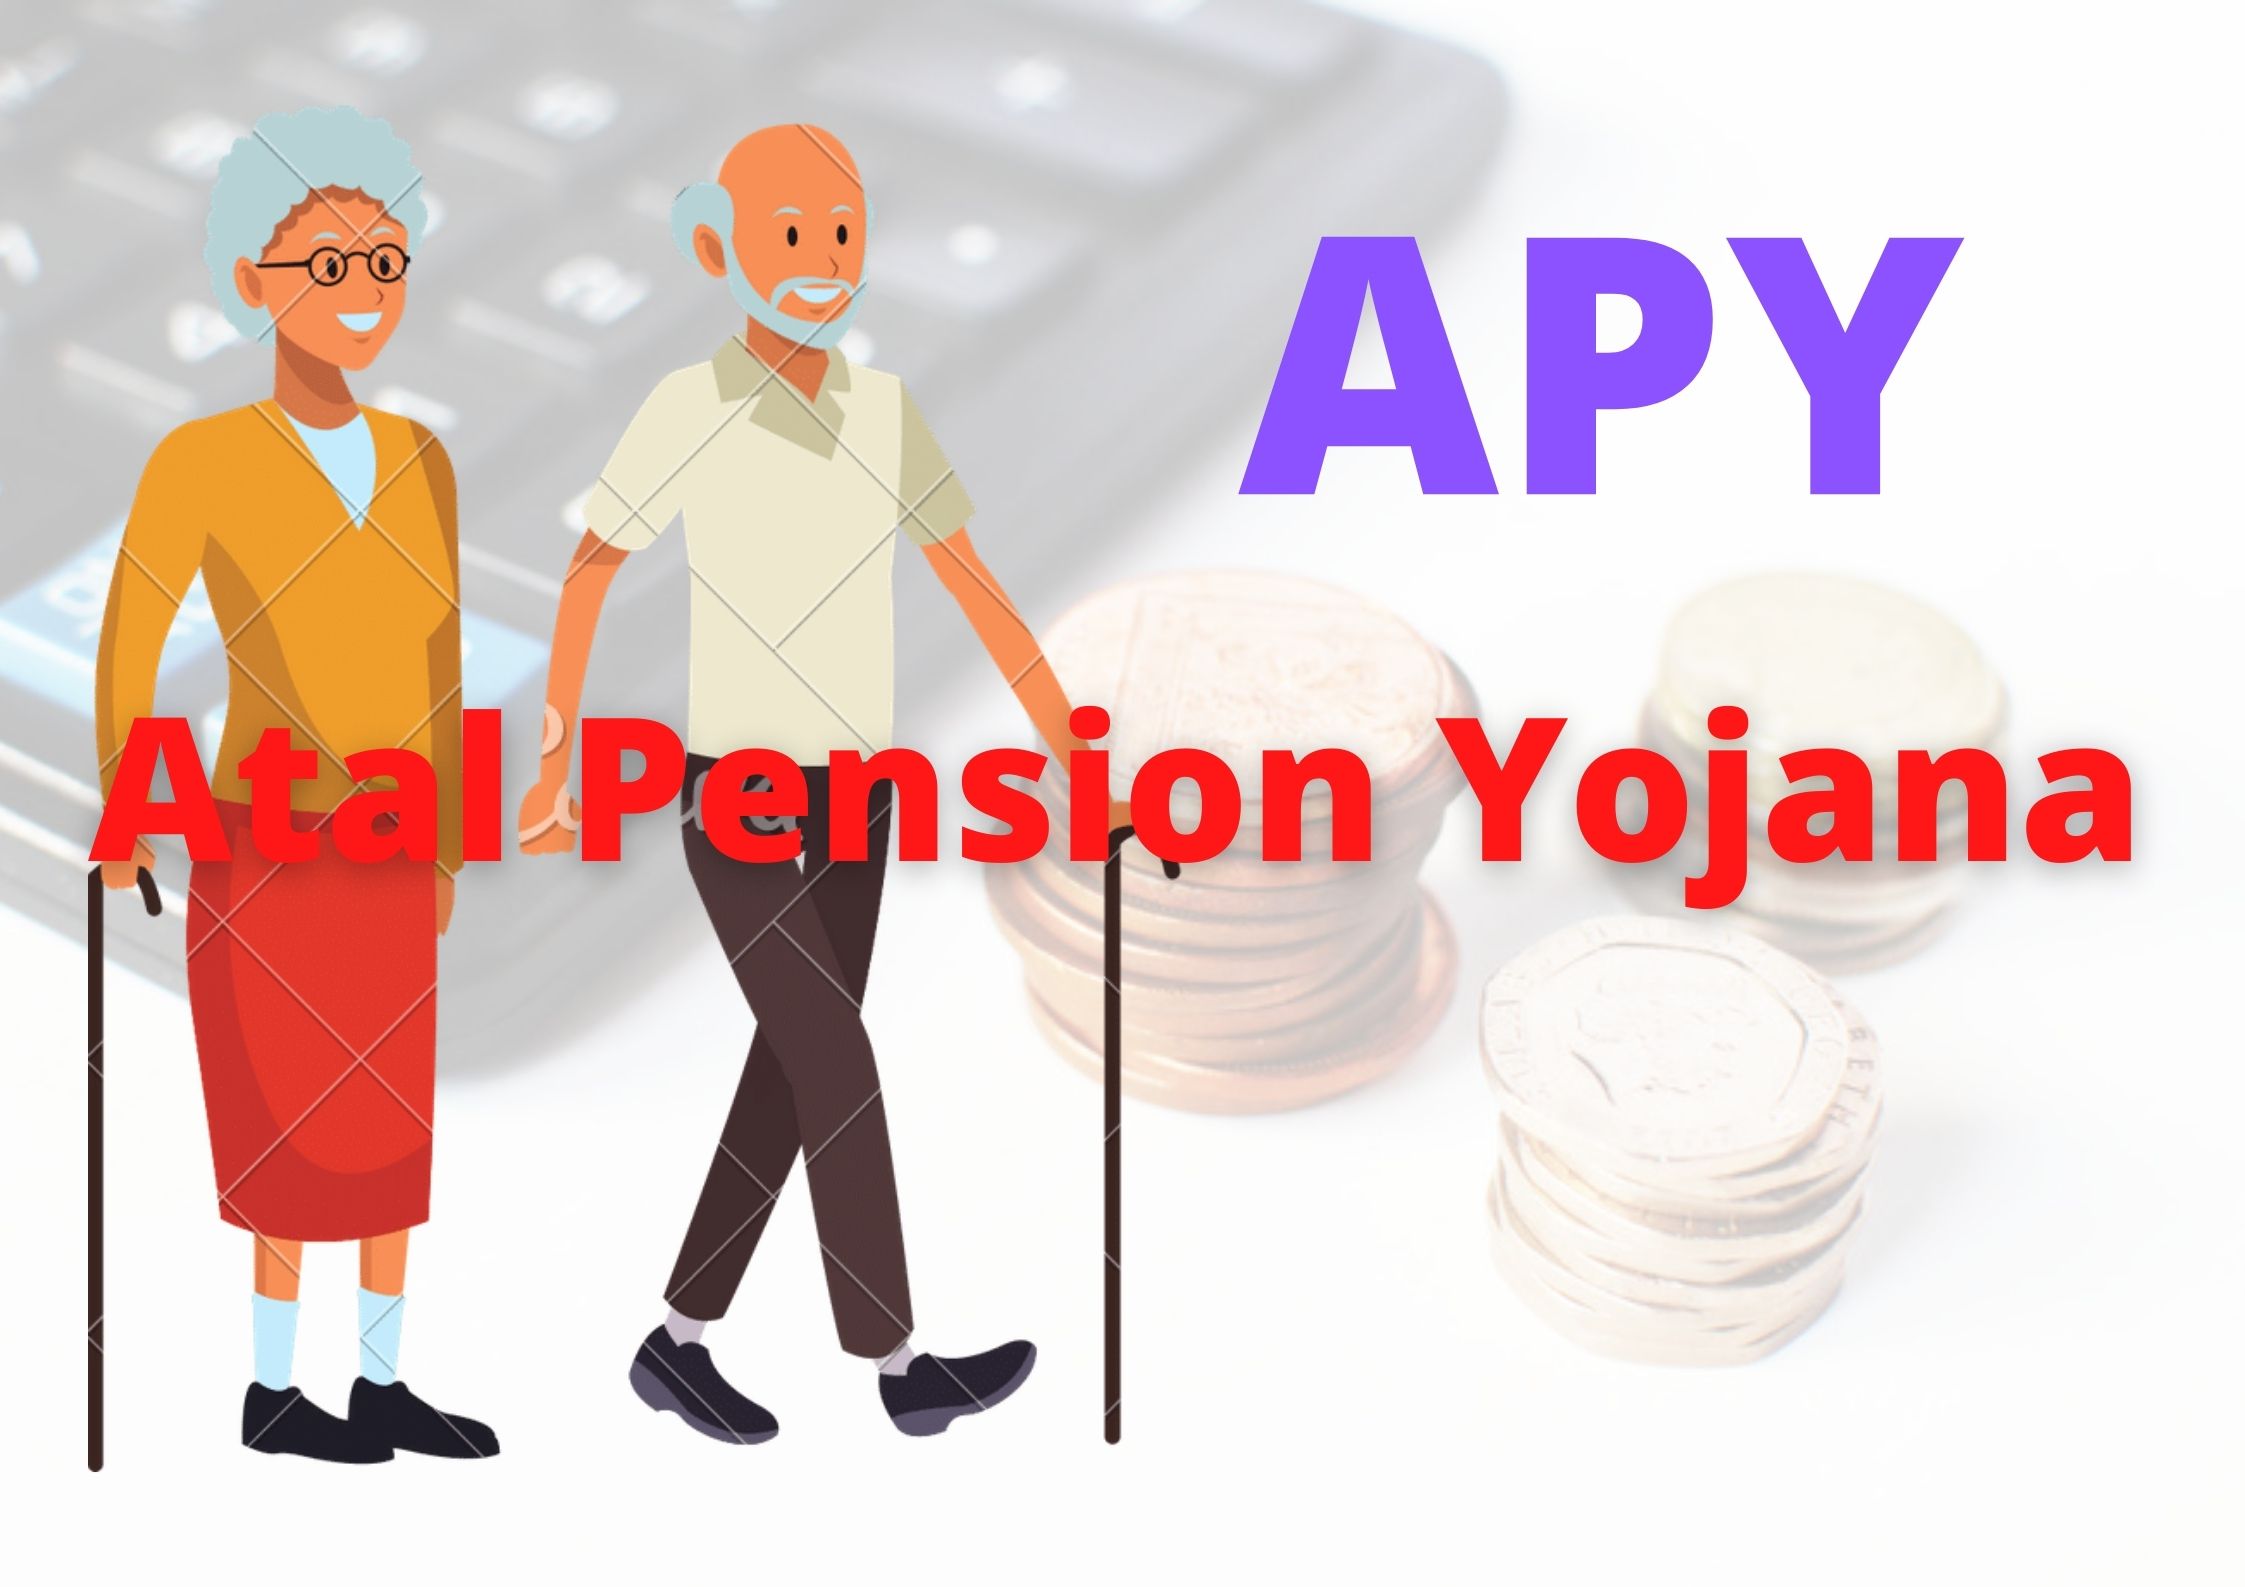 Atal Pension Yojana Scheme Details in Hindi